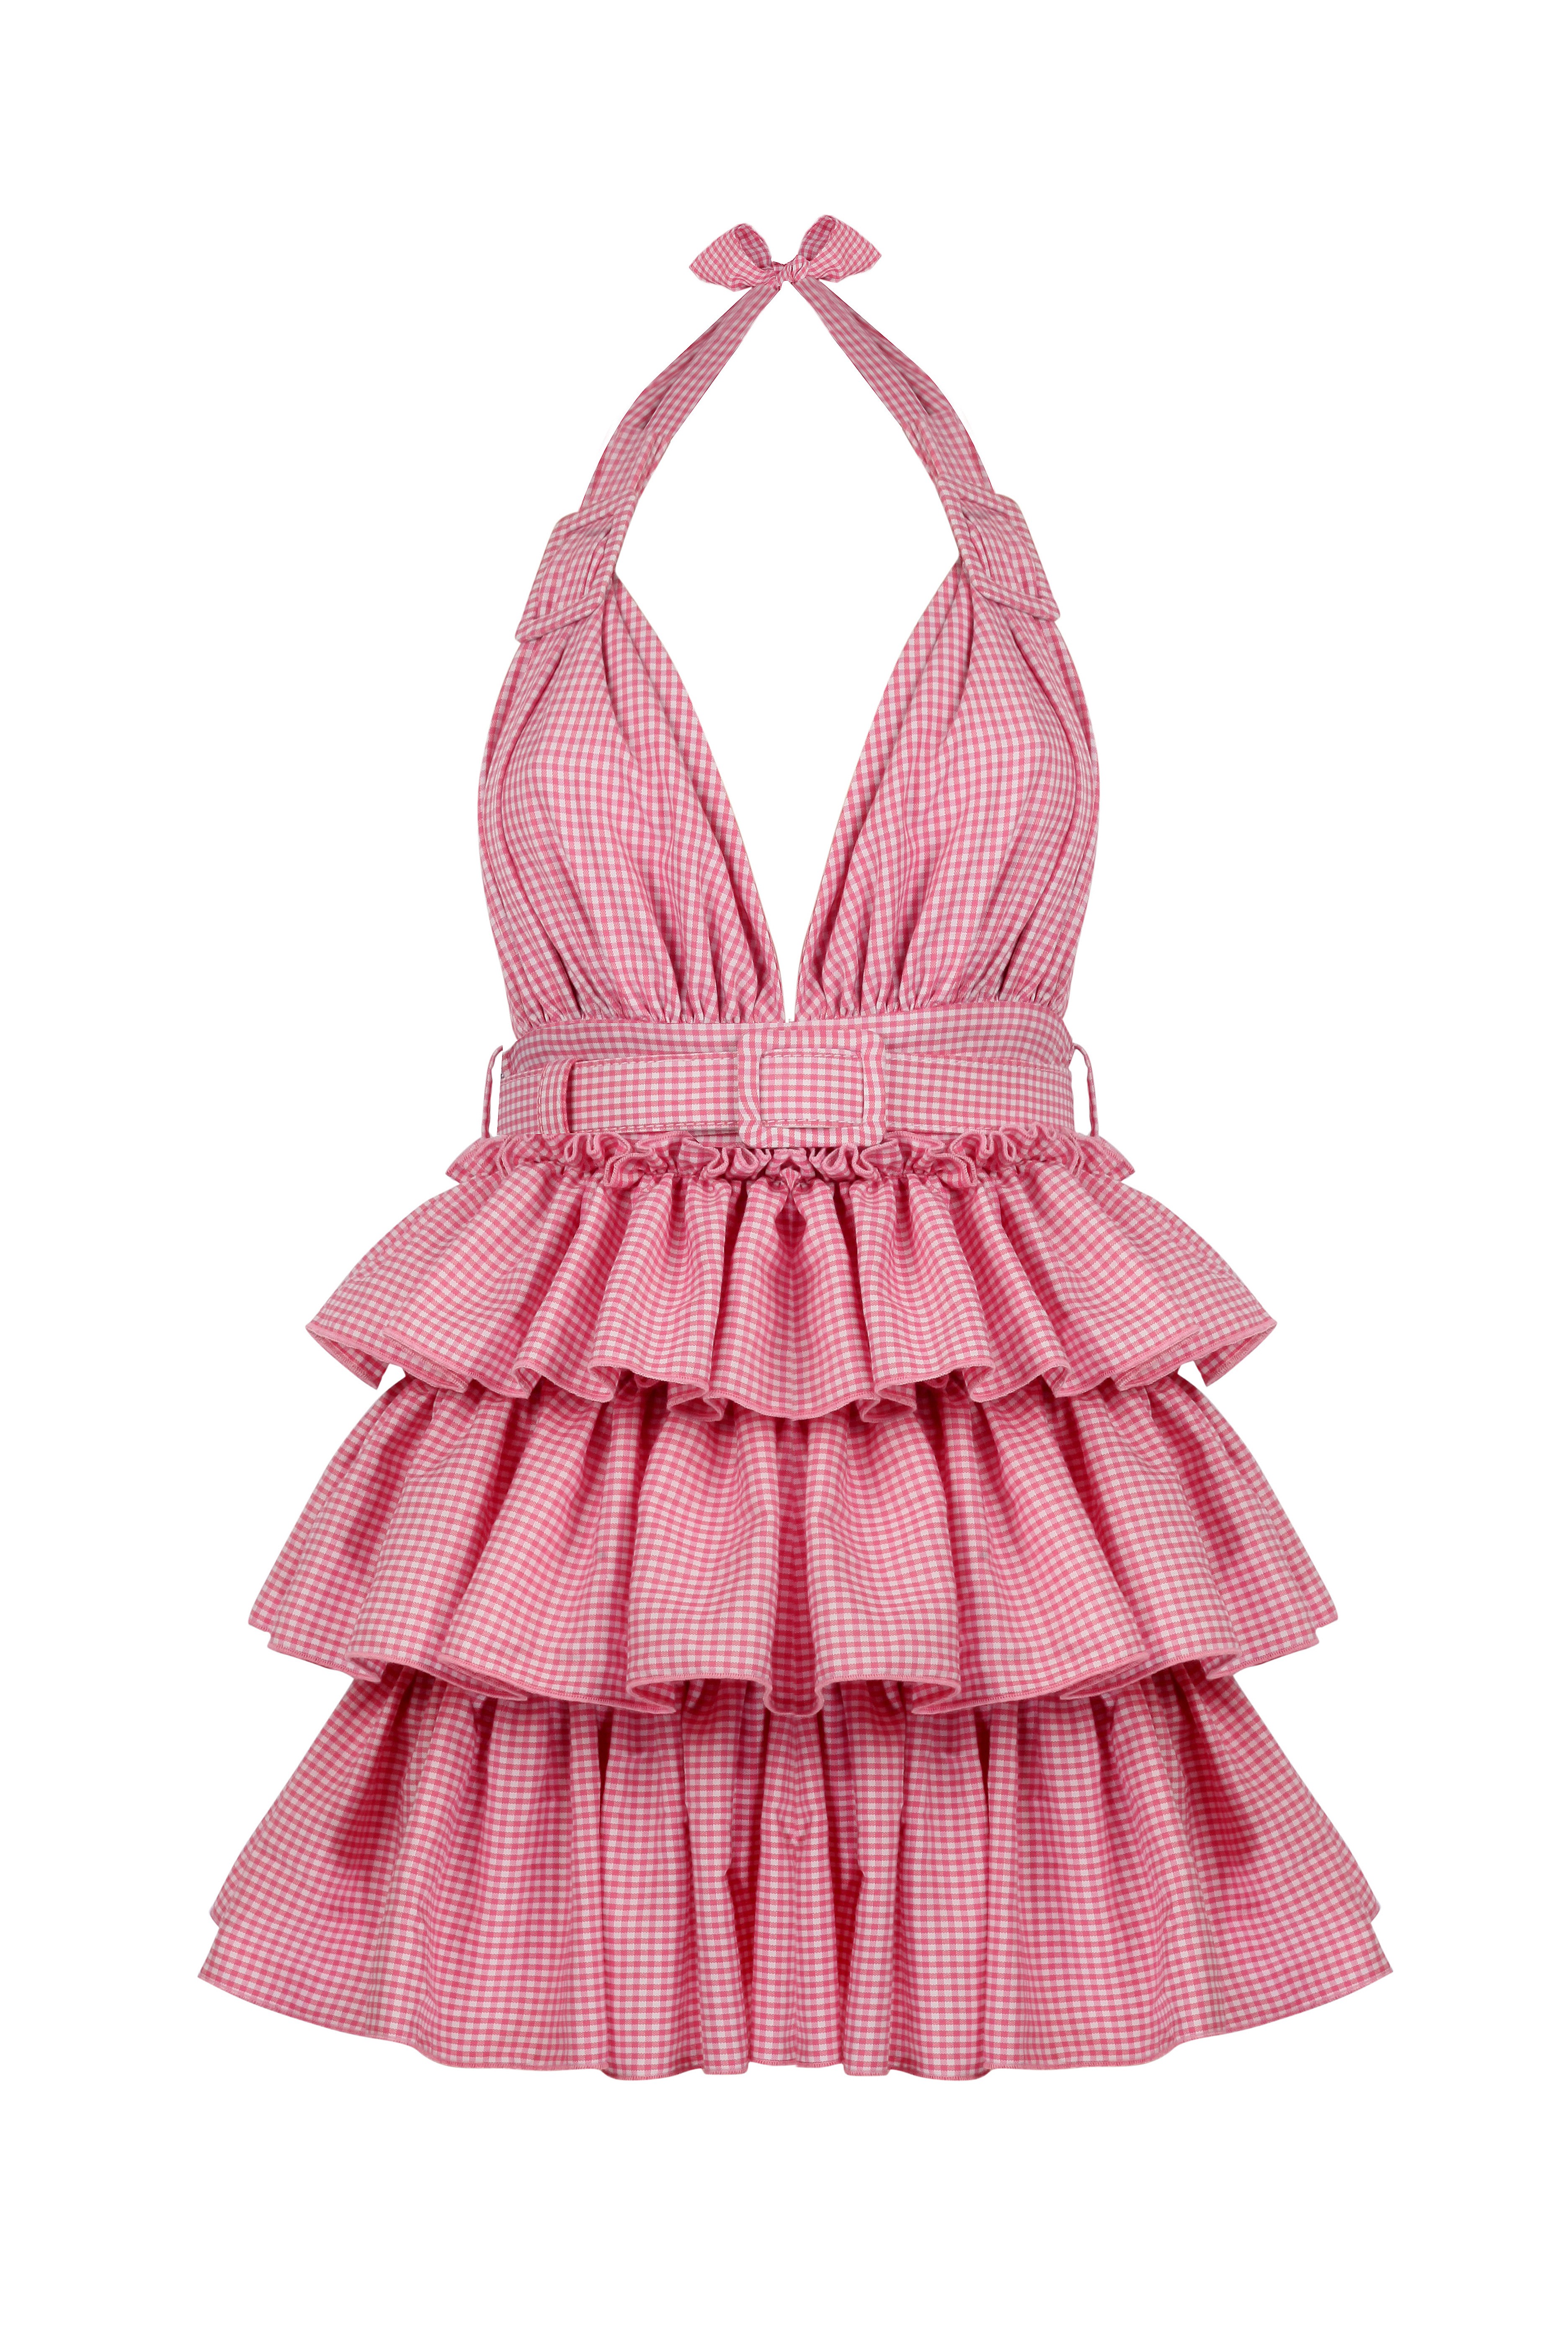 Bellano Pink Dress